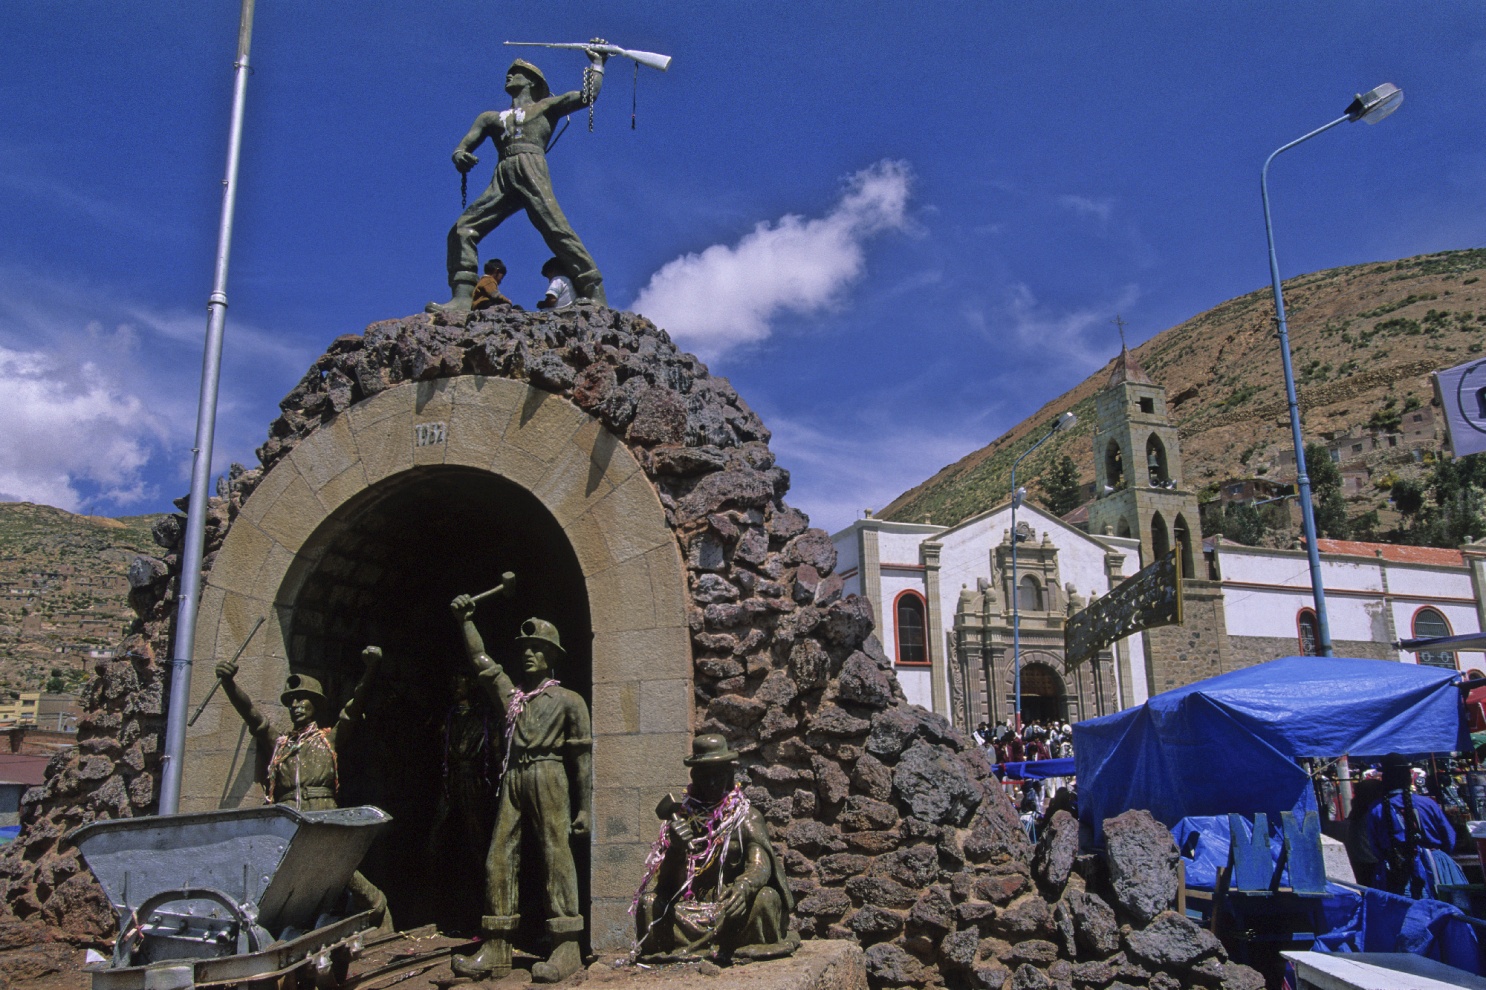 2000, Bolivia, carnevale di Oruro